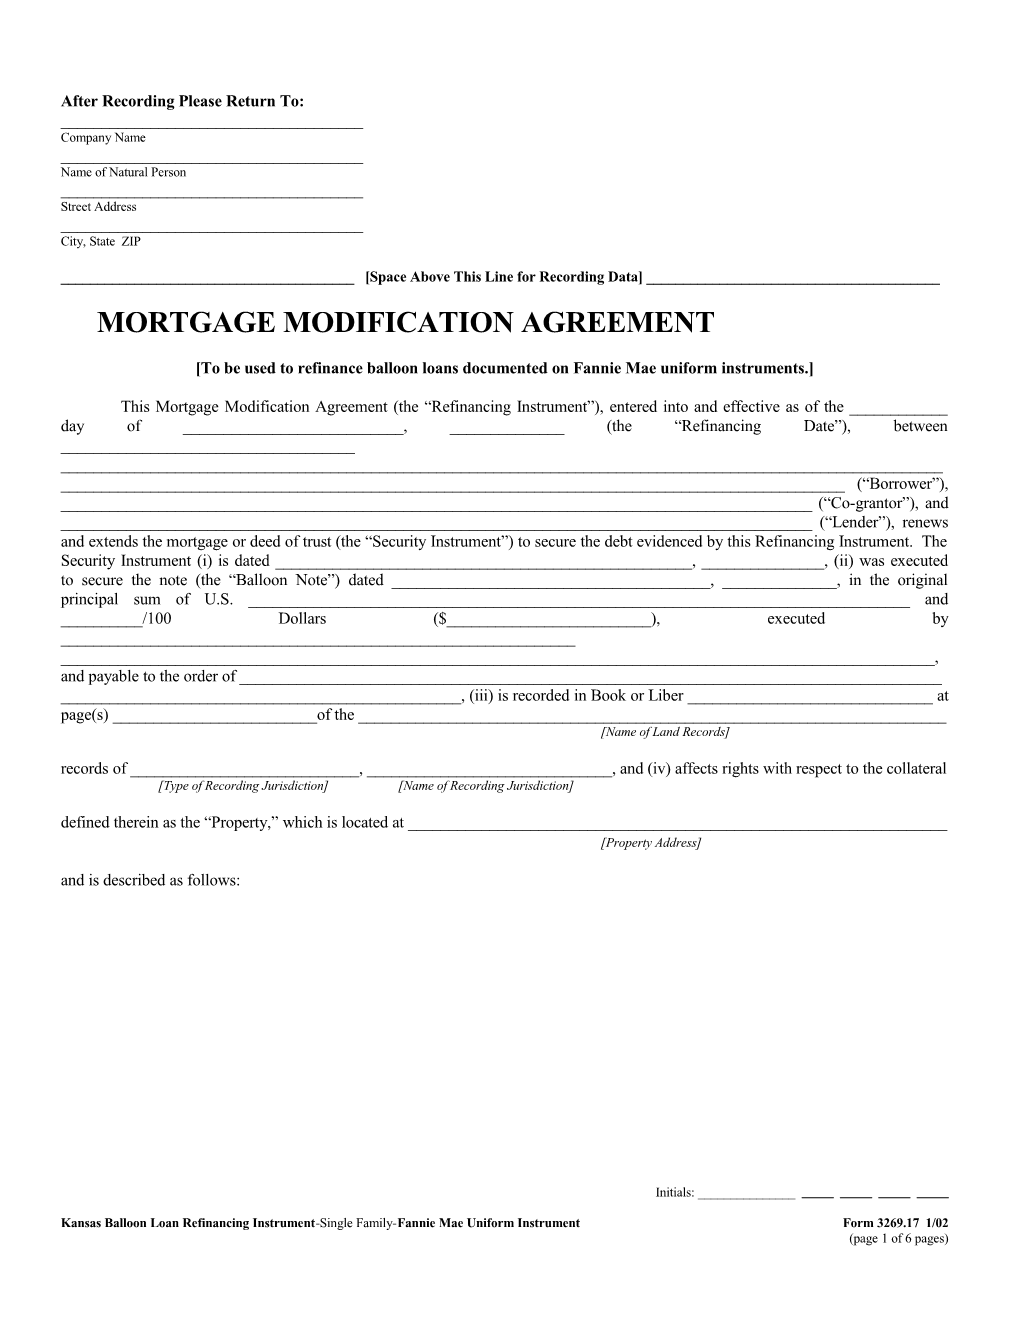 Kansas Balloon Loan Refinancing Instrument (Form 3269): Word